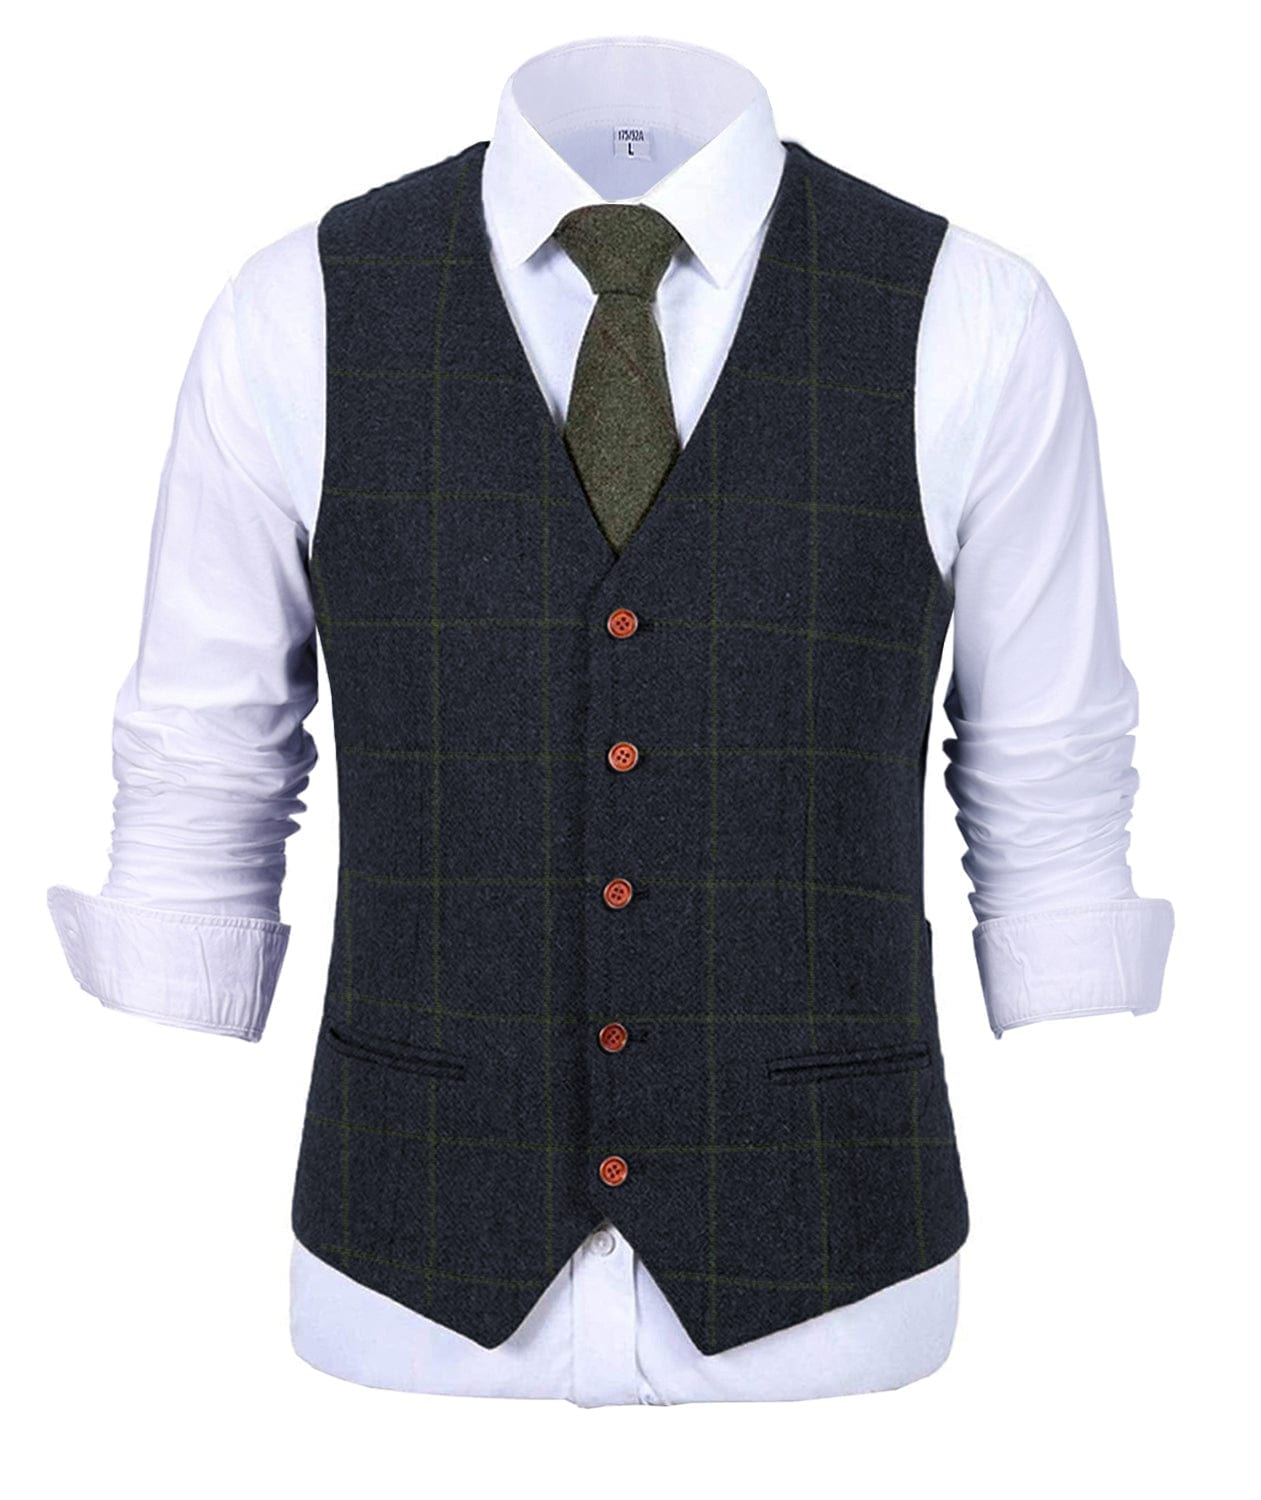 ceehuteey Formal Men's Suit Vest Tweed Plaid V Neck Waistcoat